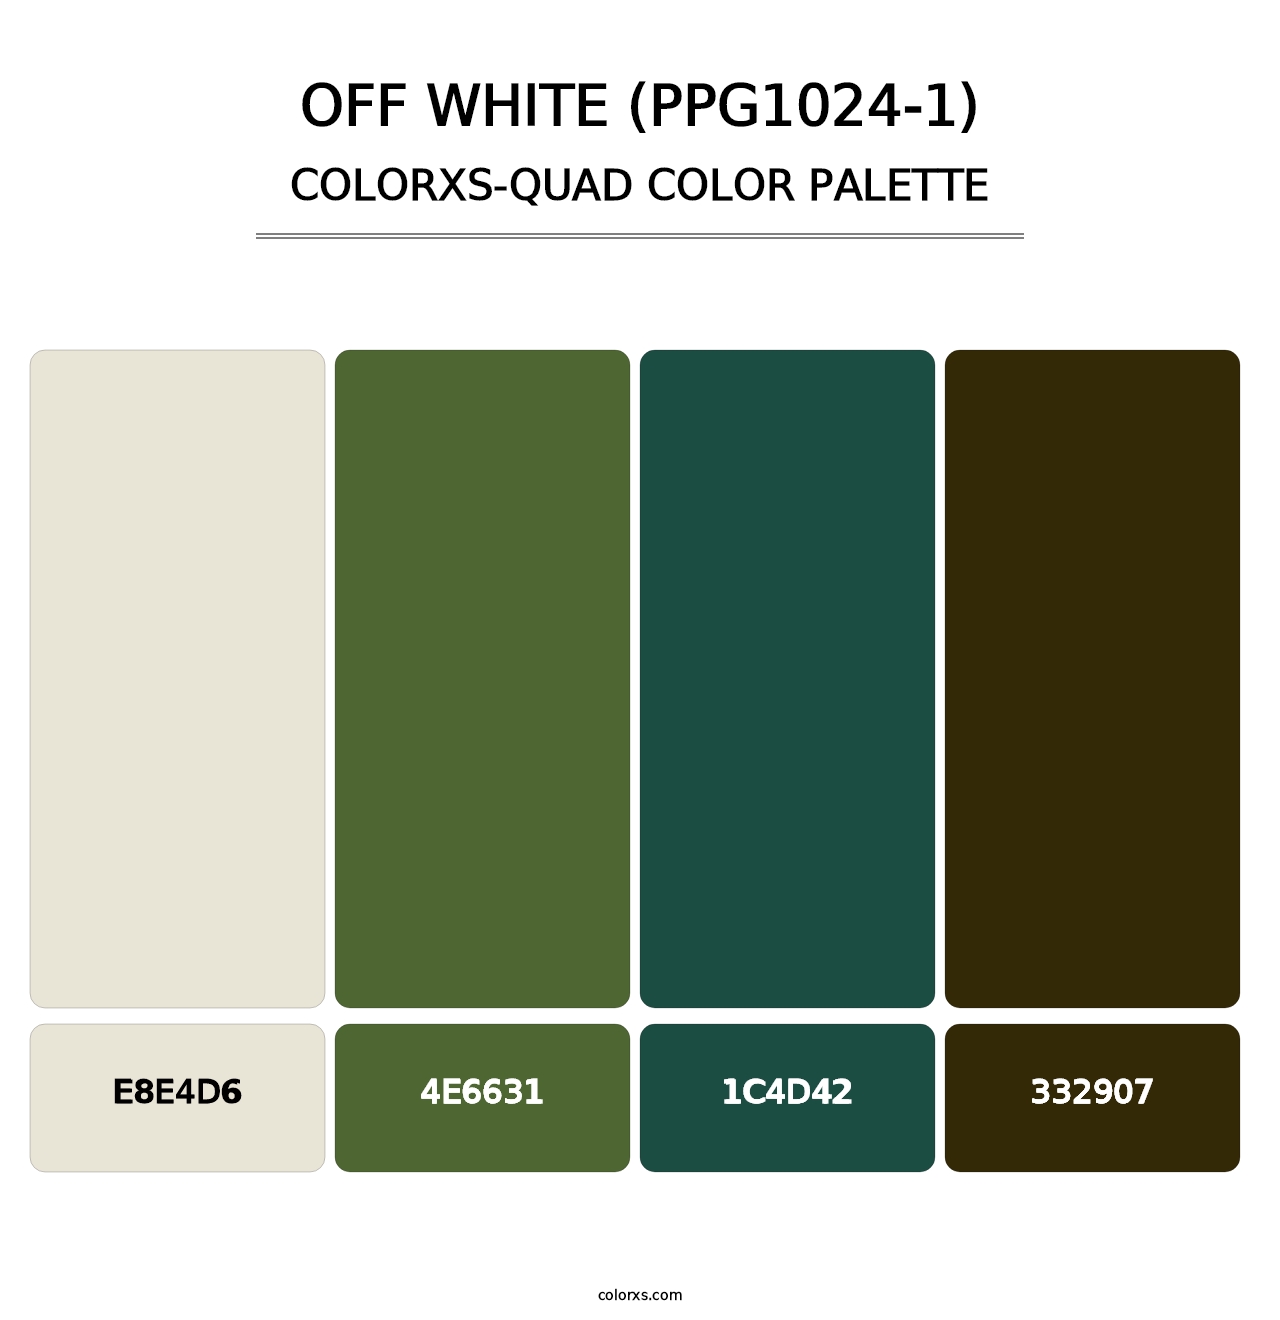 Off White (PPG1024-1) - Colorxs Quad Palette